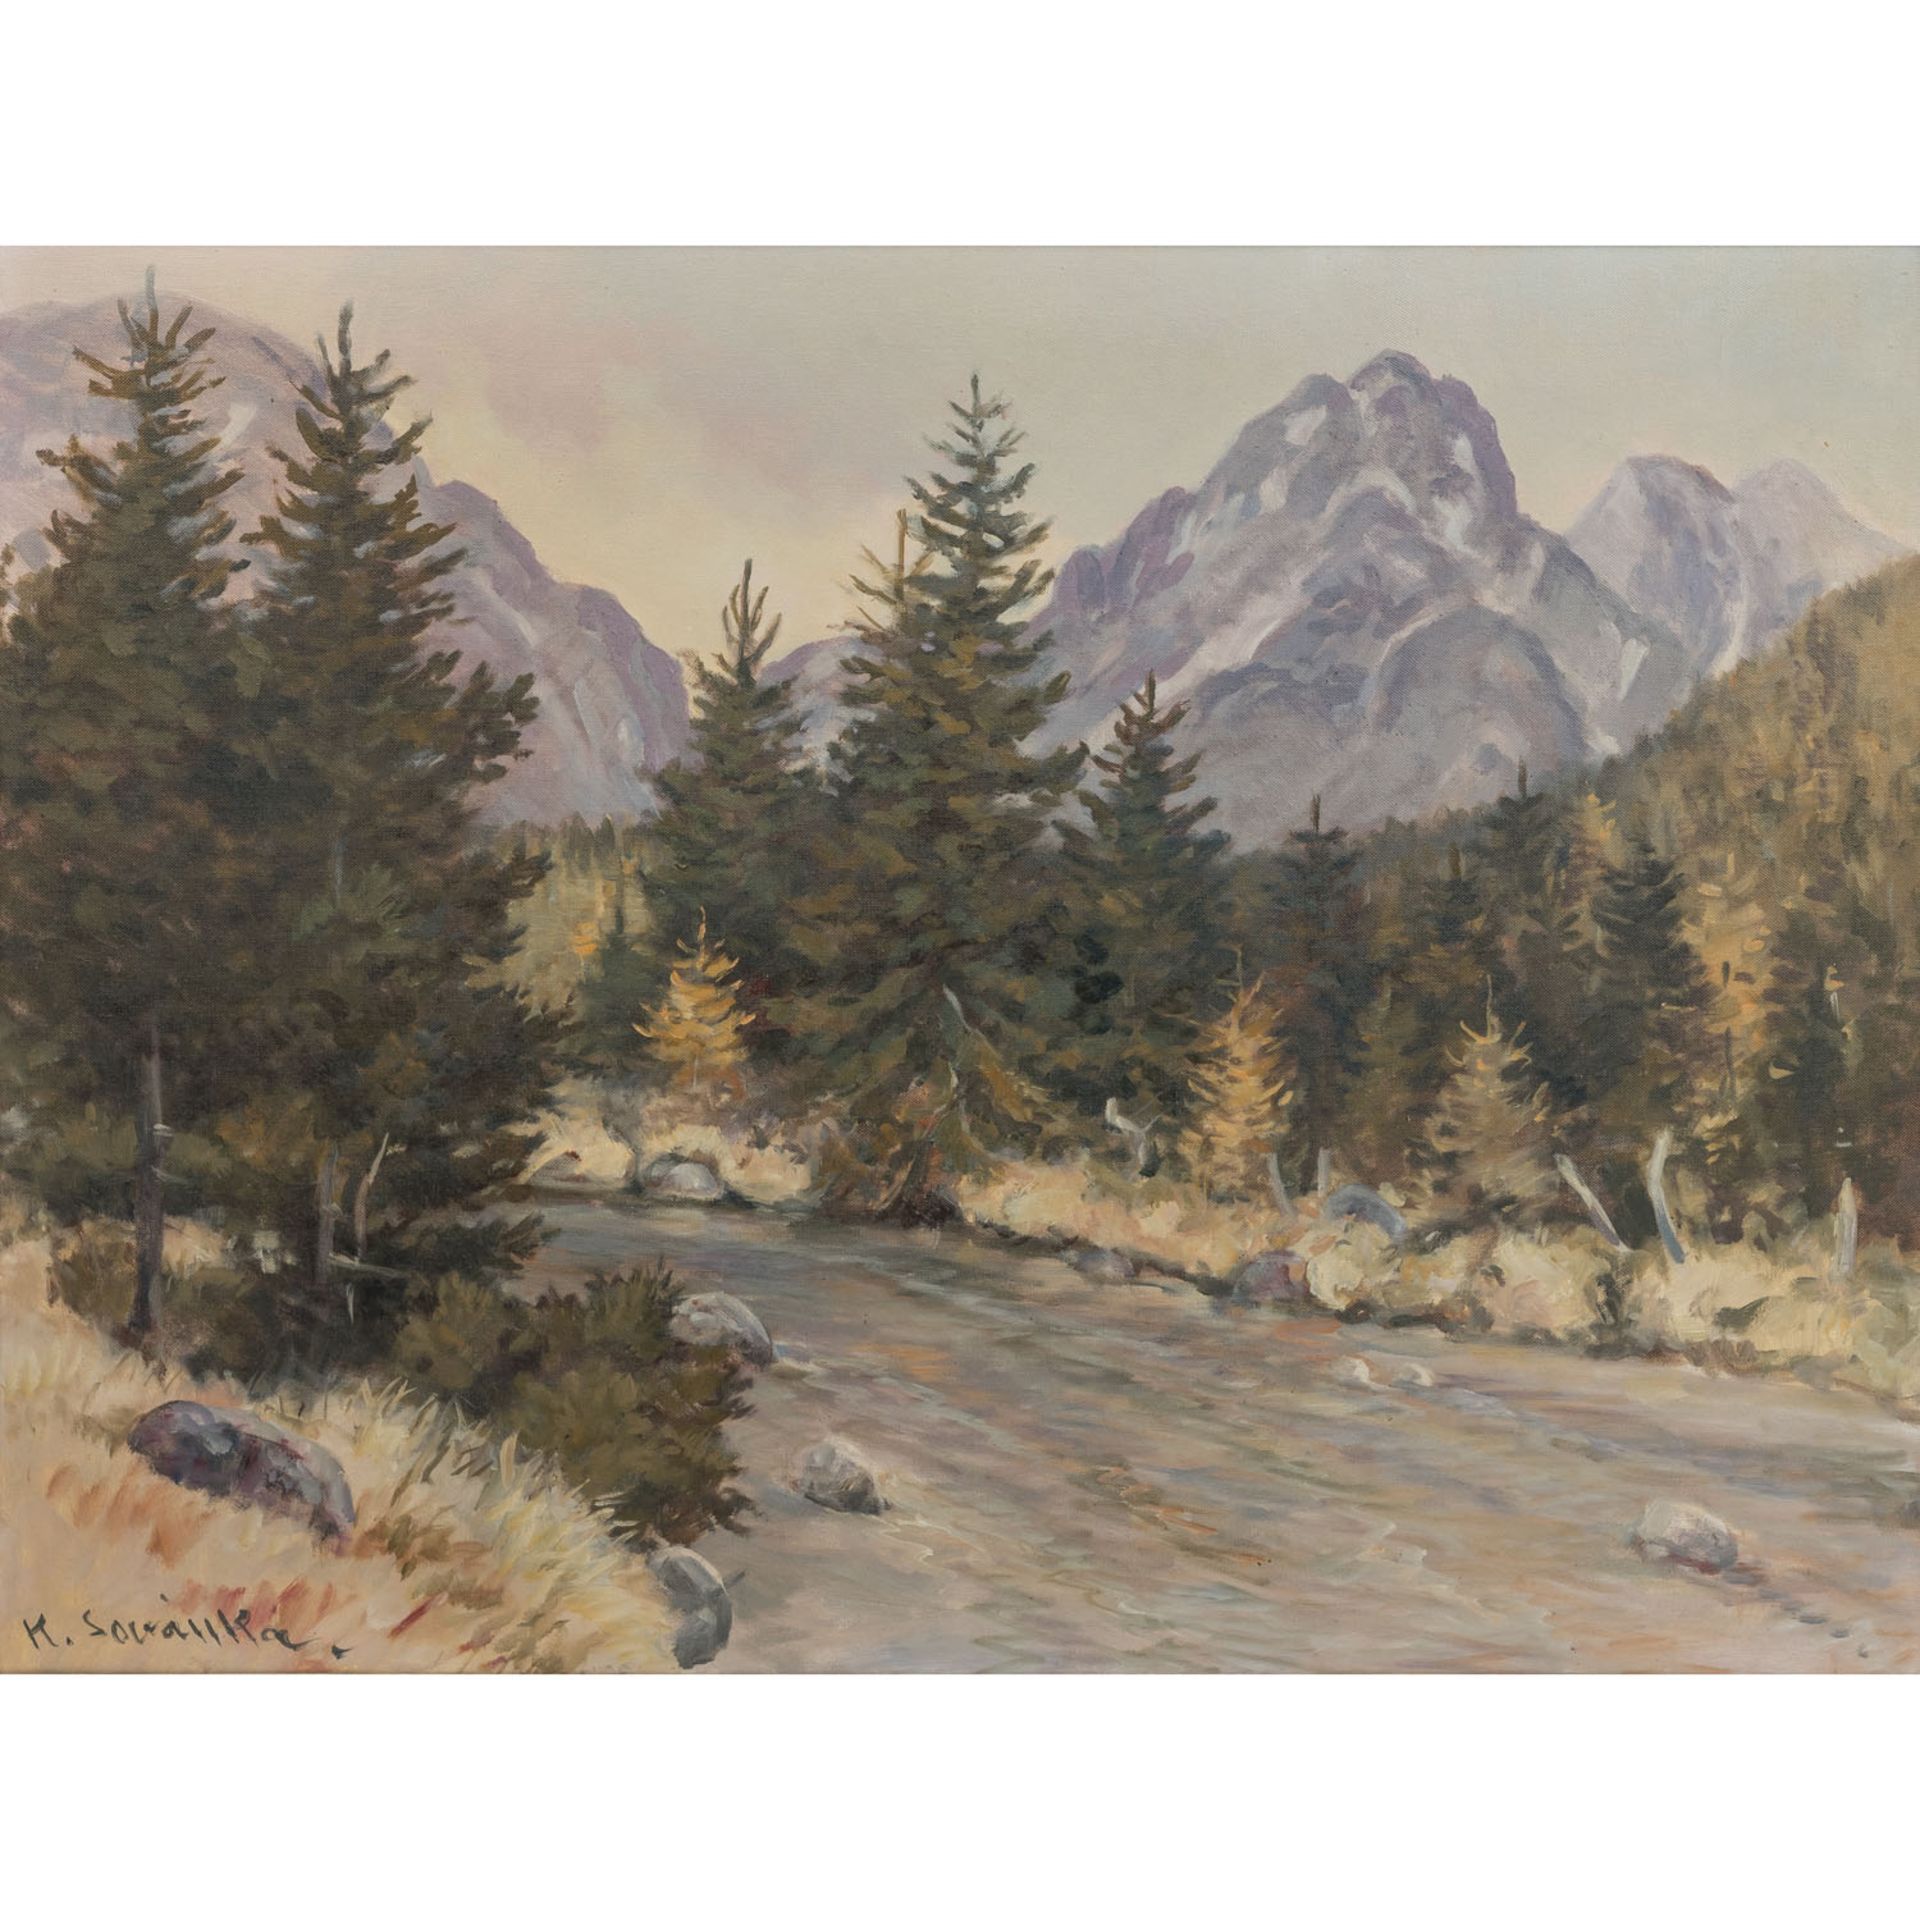 SOVANKA, KAROL (1883-1961), "Fluss im Gebirge",